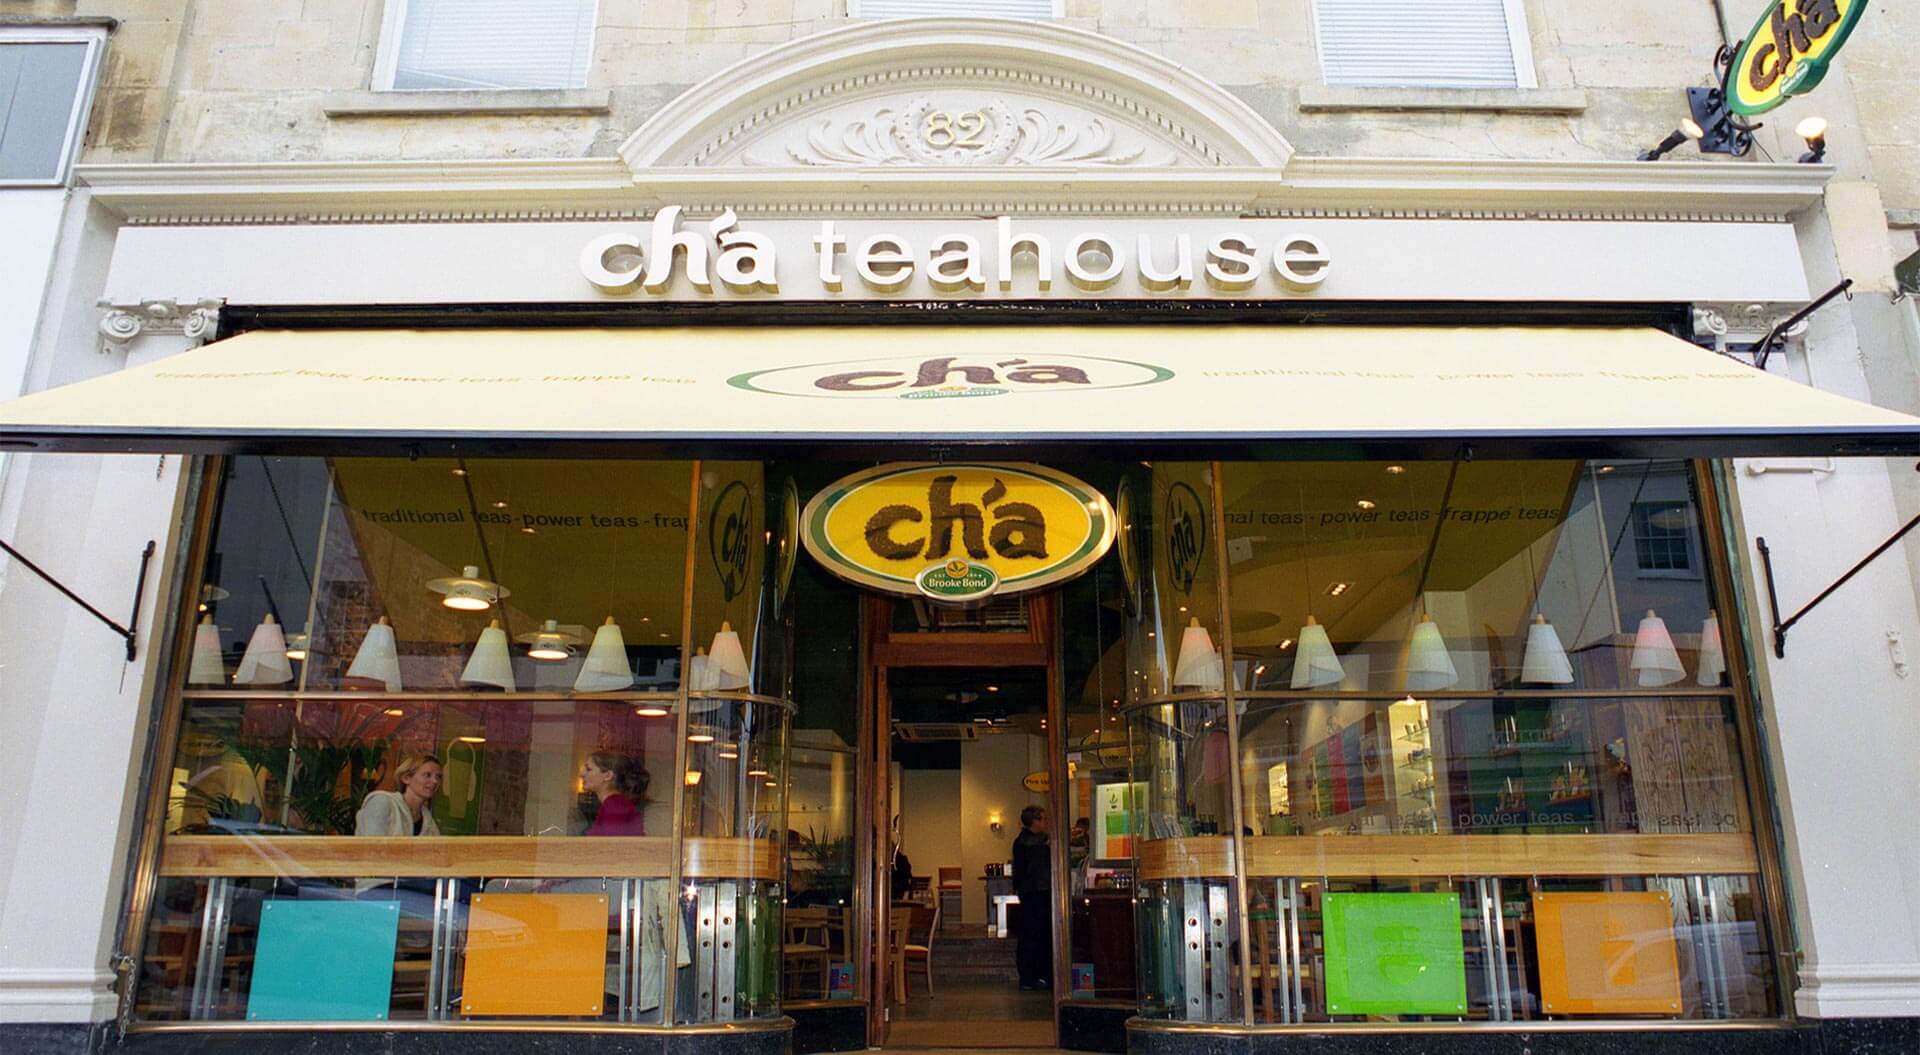 Cha Teahouse café  interior design and brand identity